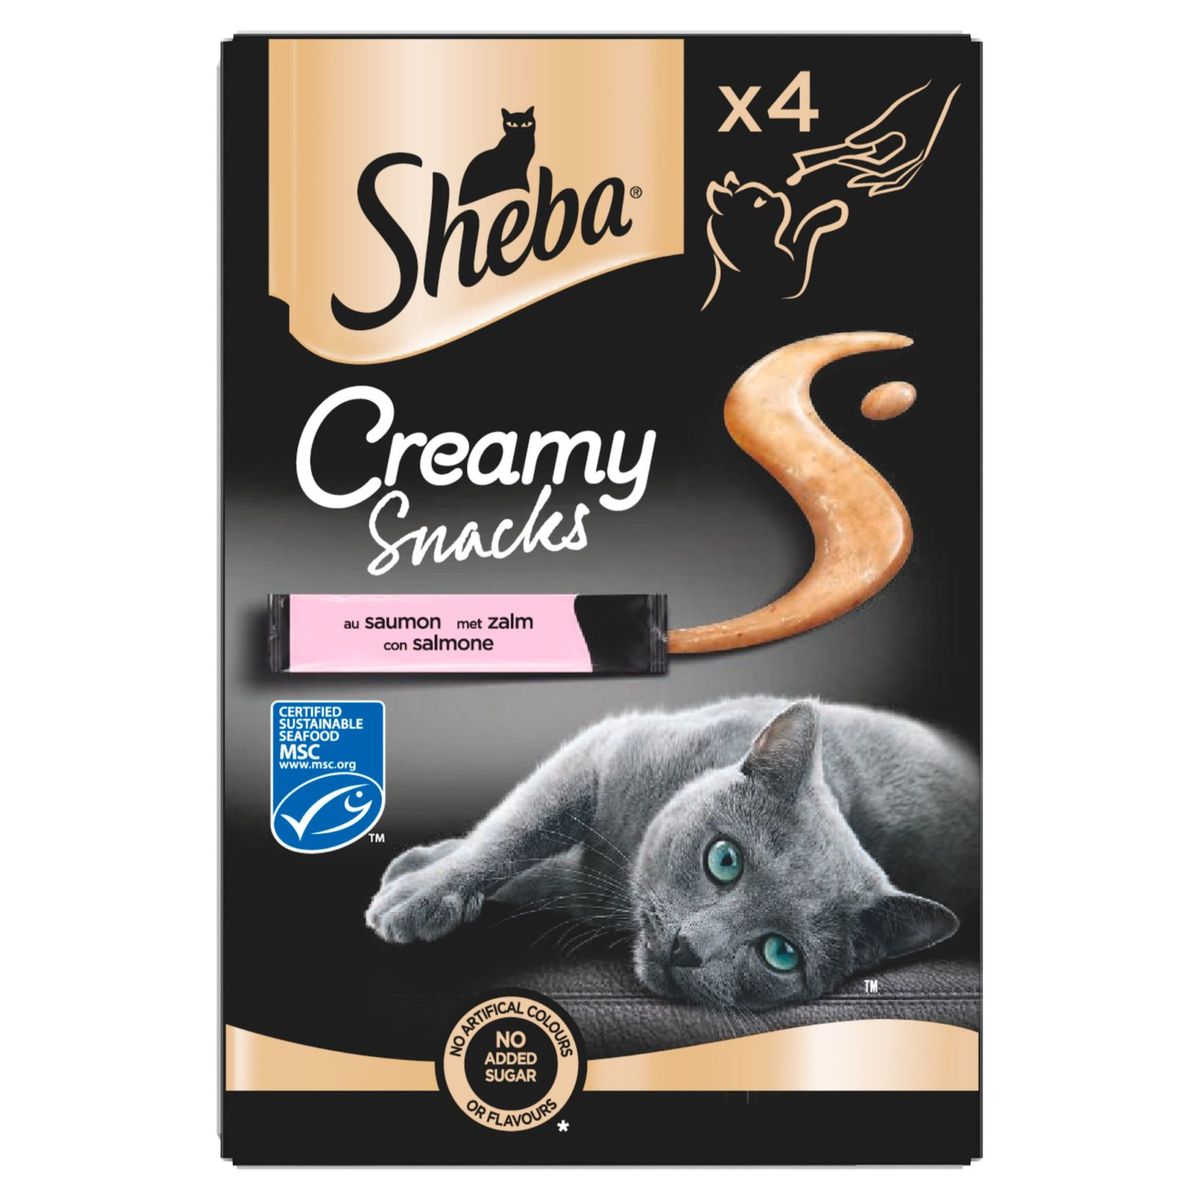 Sheba Creamy Snacks au Saumon 4 Pièces